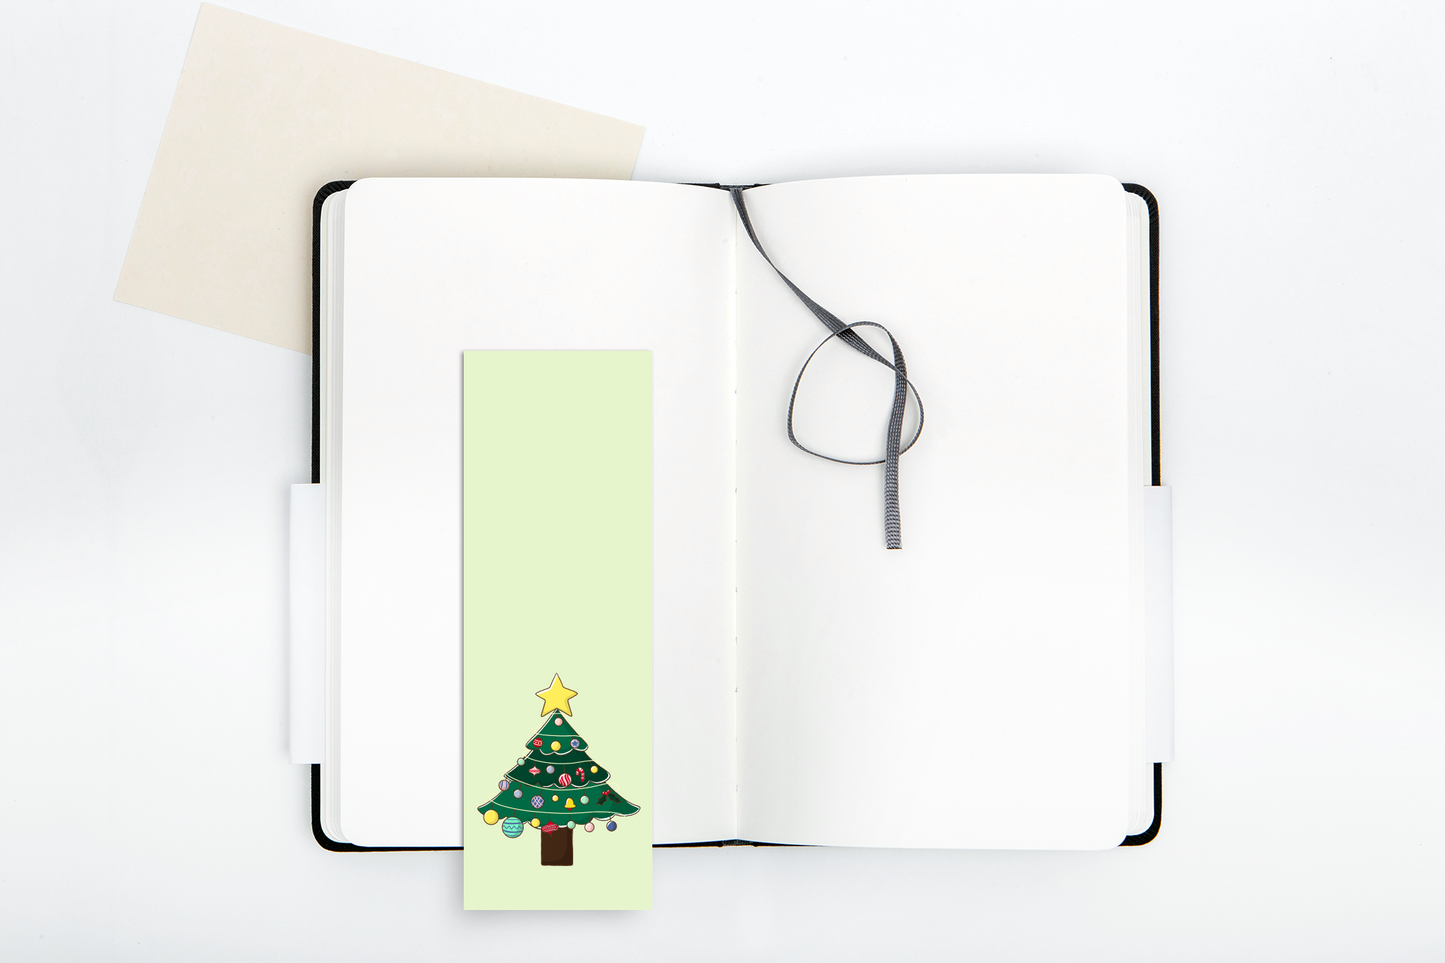 Oh Christmas Tree Bookmark